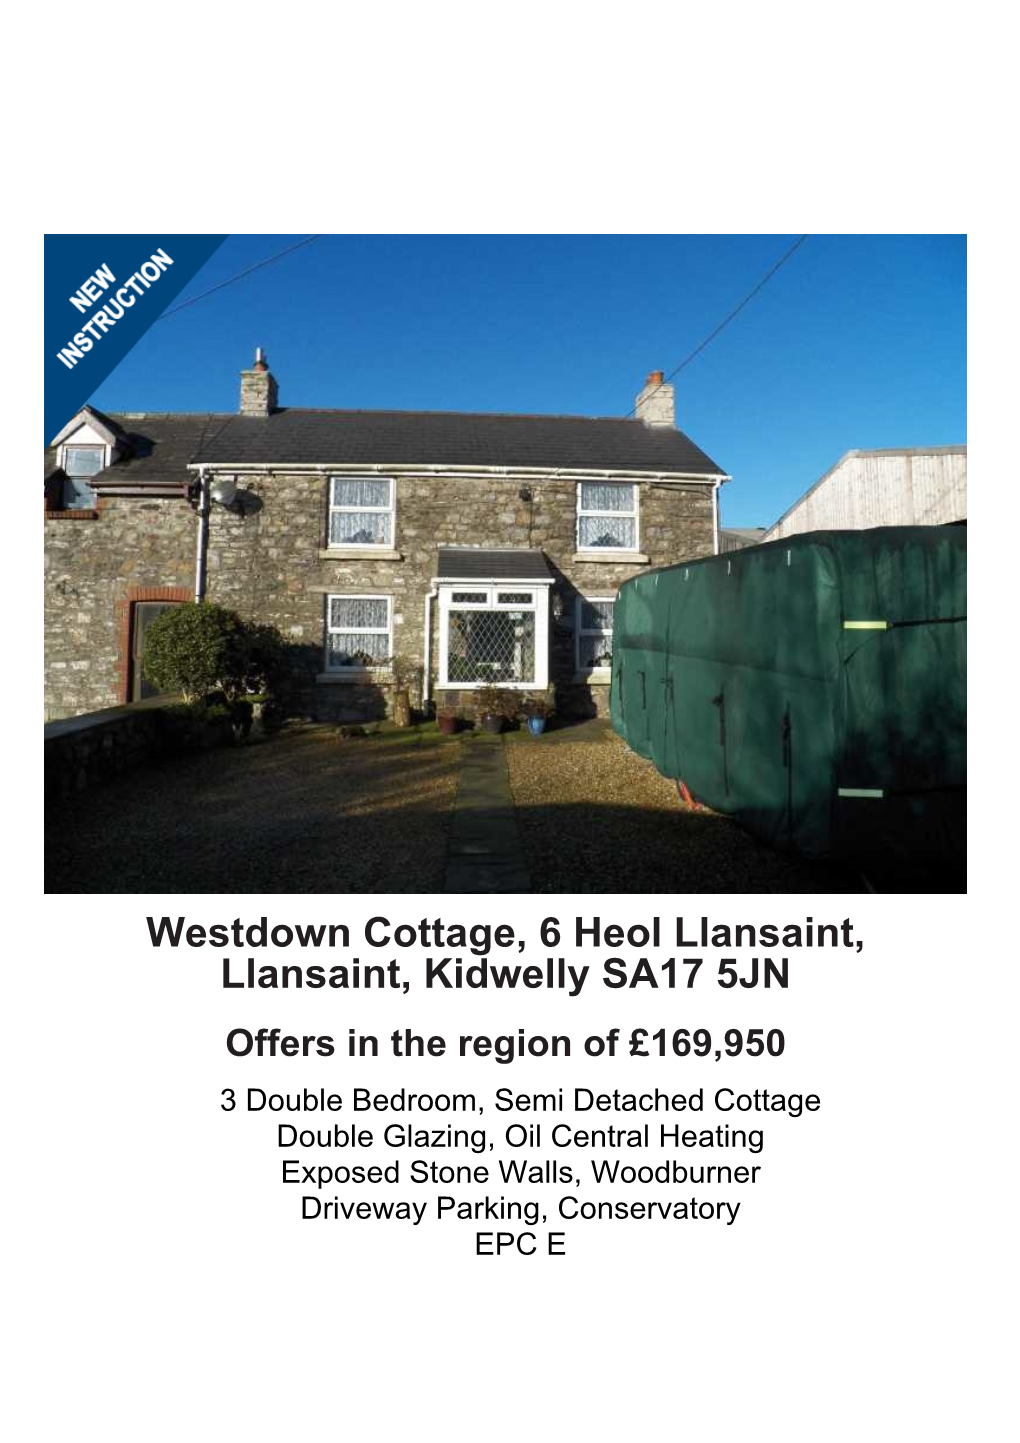 Westdown Cottage, 6 Heol Llansaint, Llansaint, Kidwelly SA17